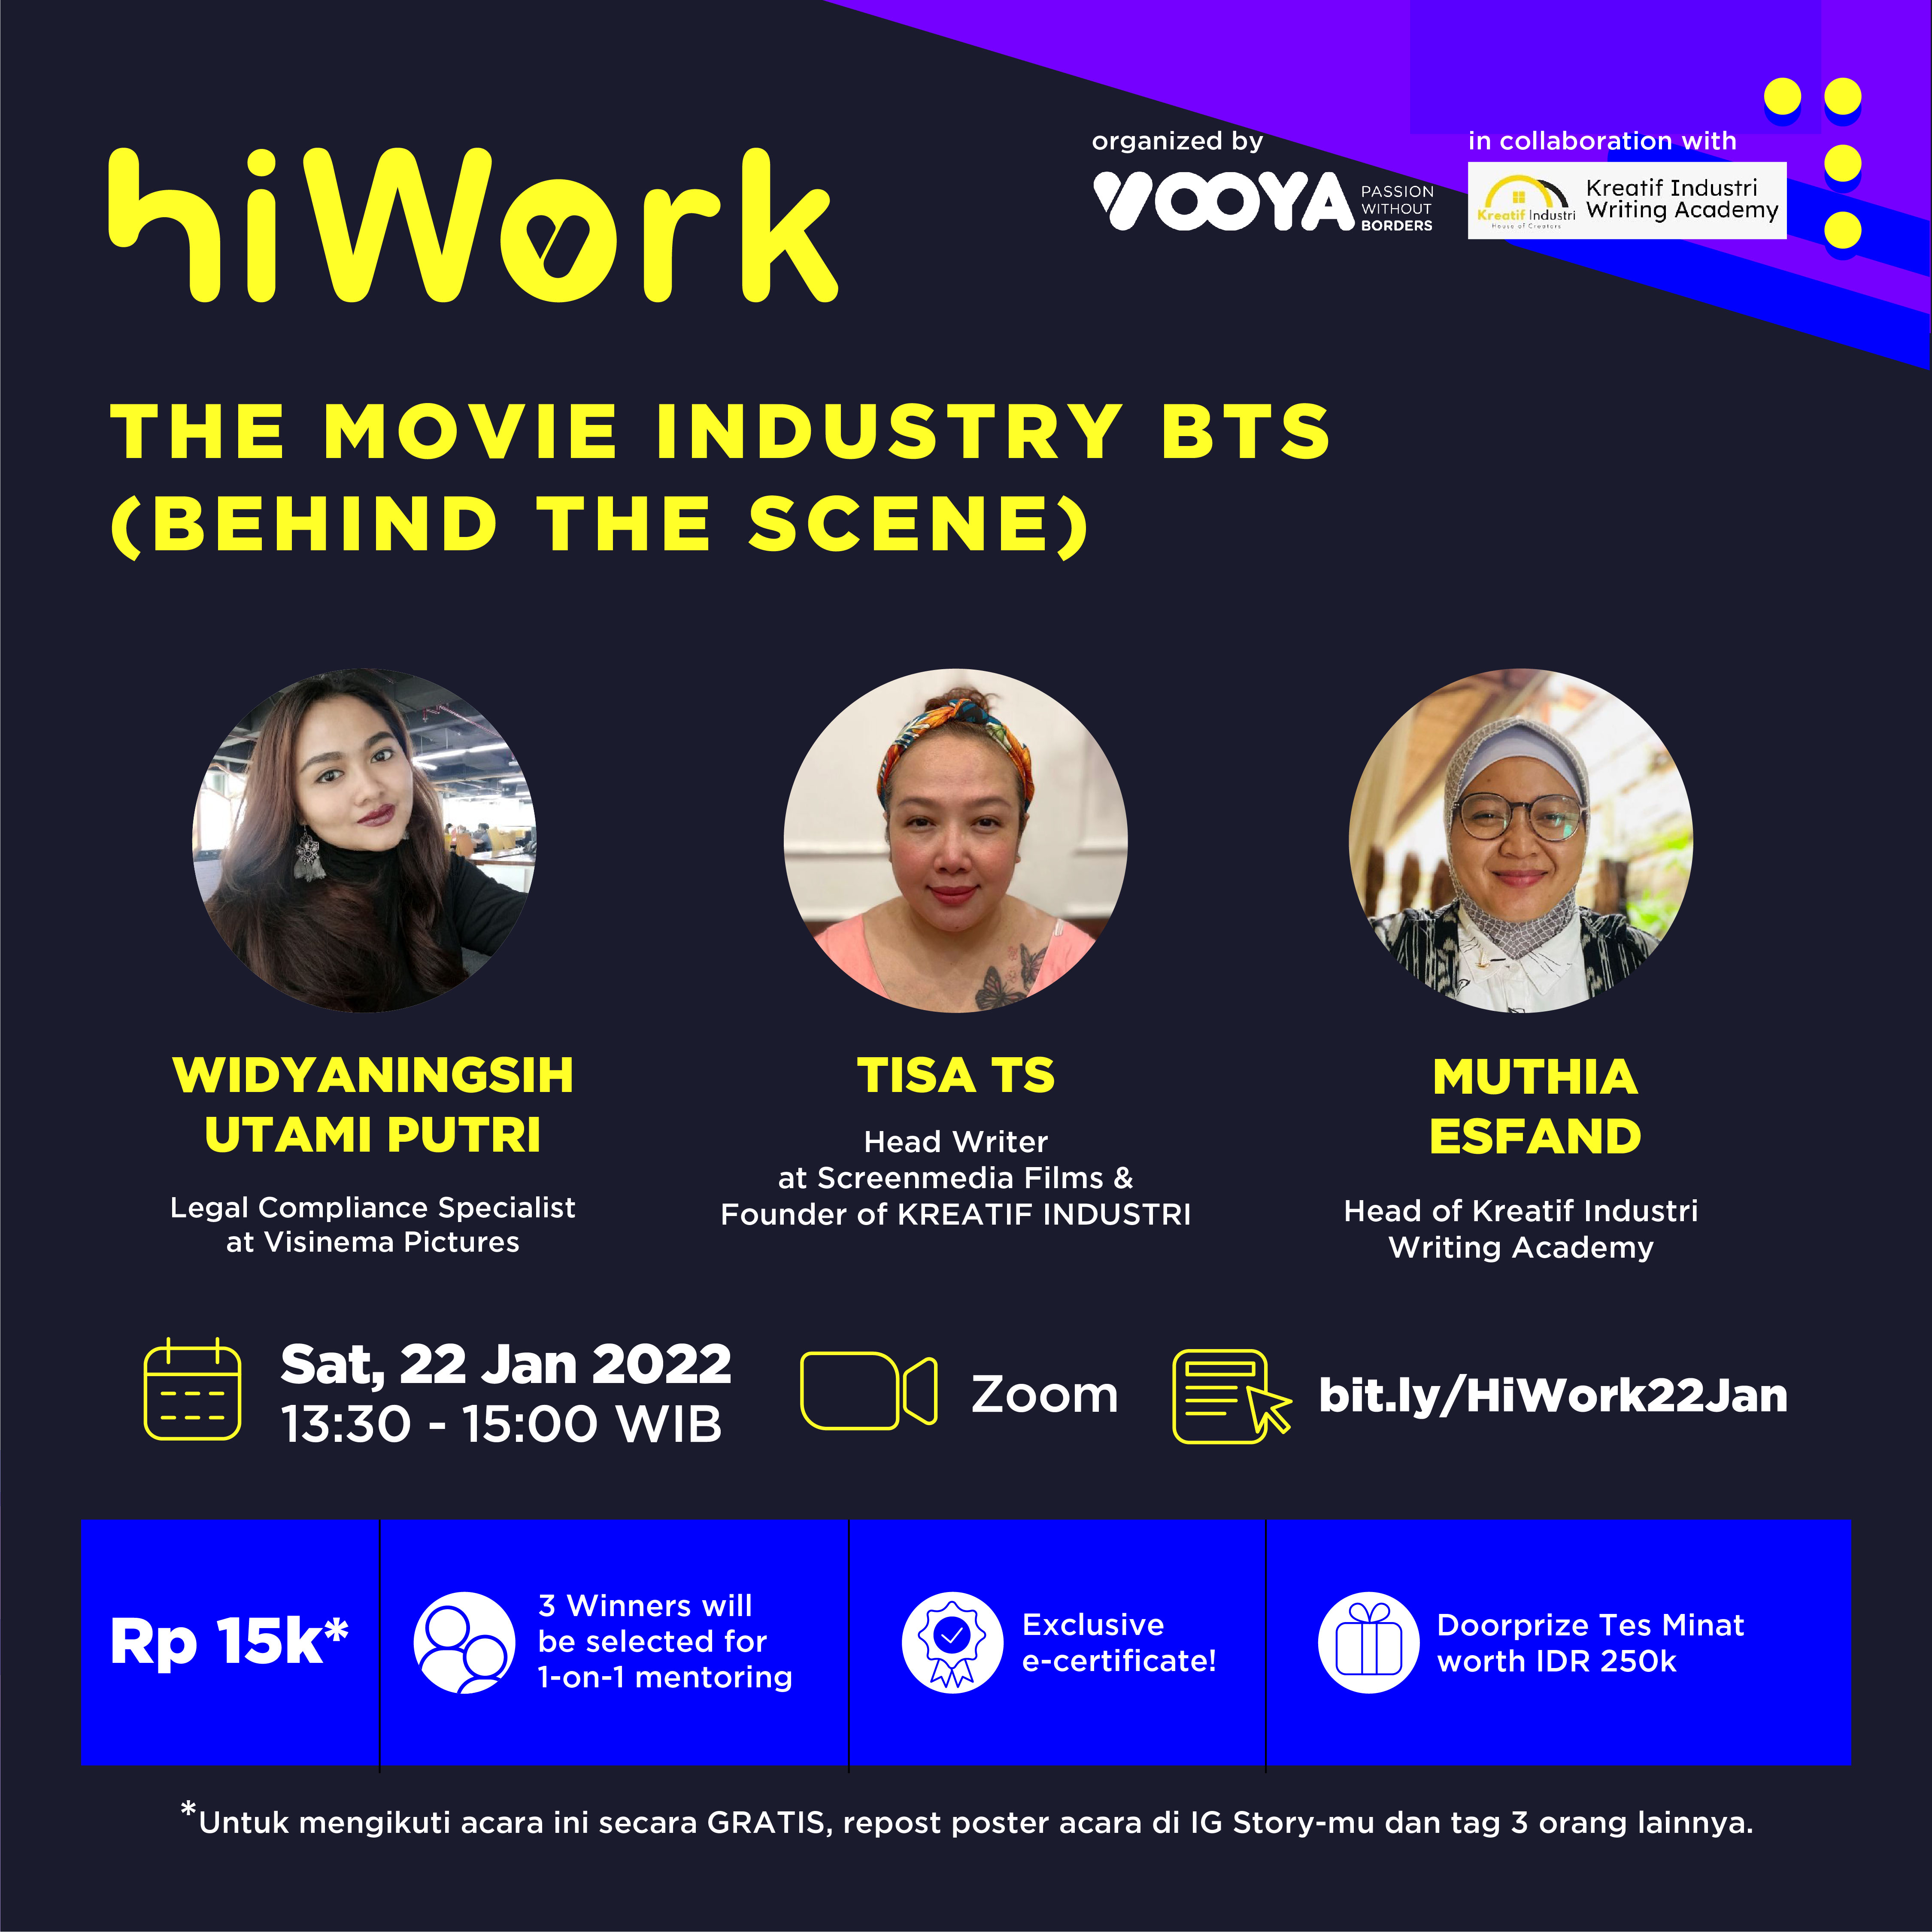 HiWork - Movie Industry Behind the Scene